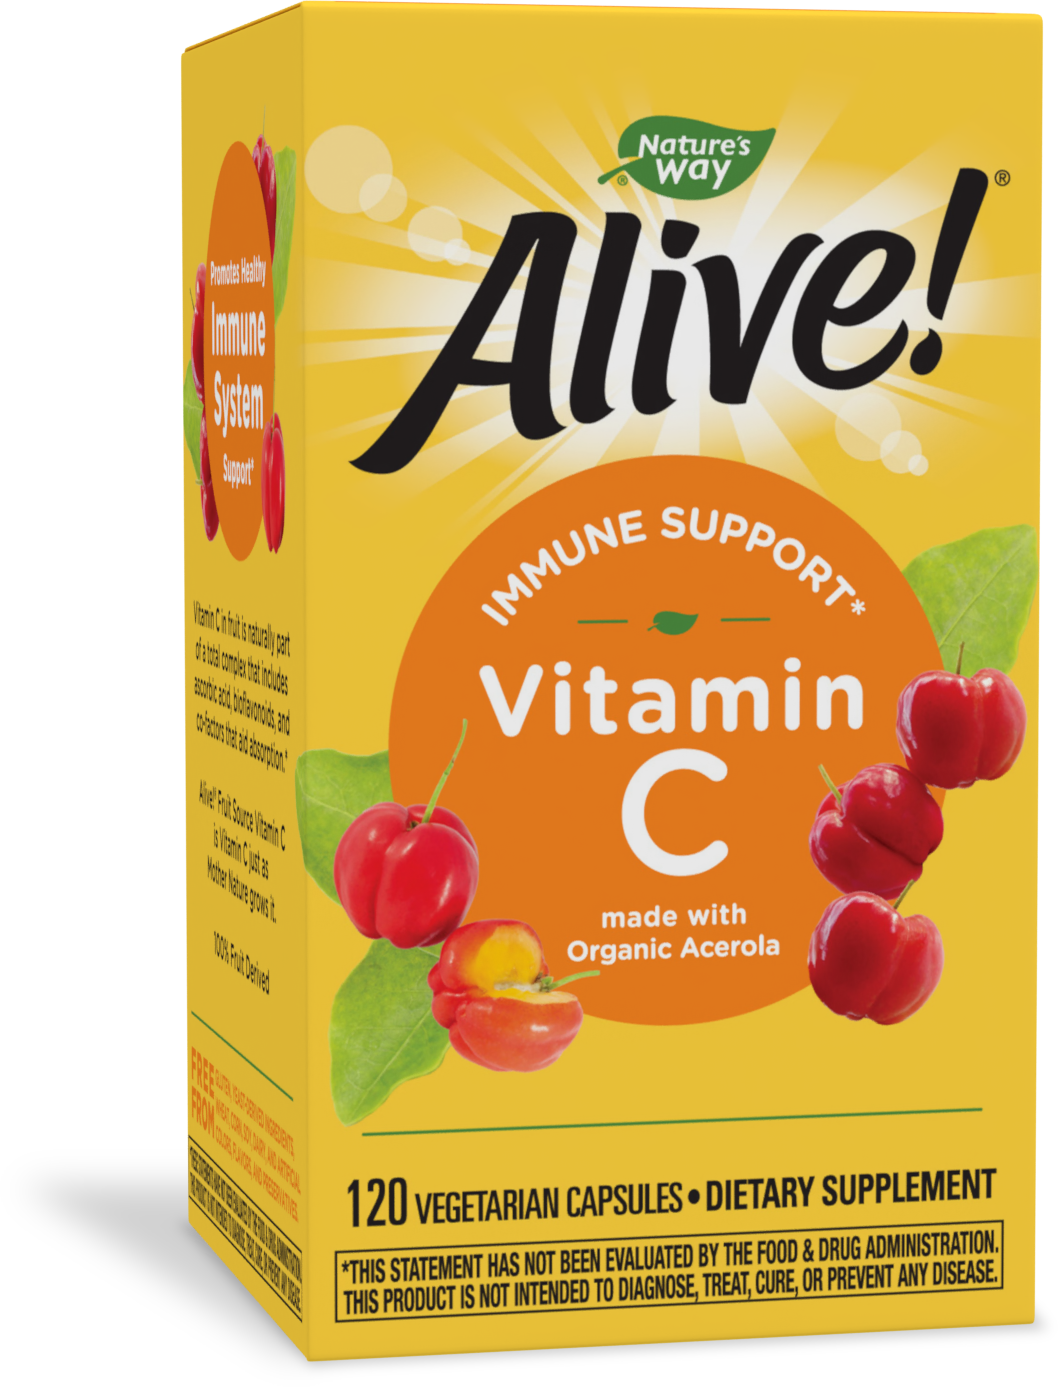 Alive!® Fruit Source Vitamin C